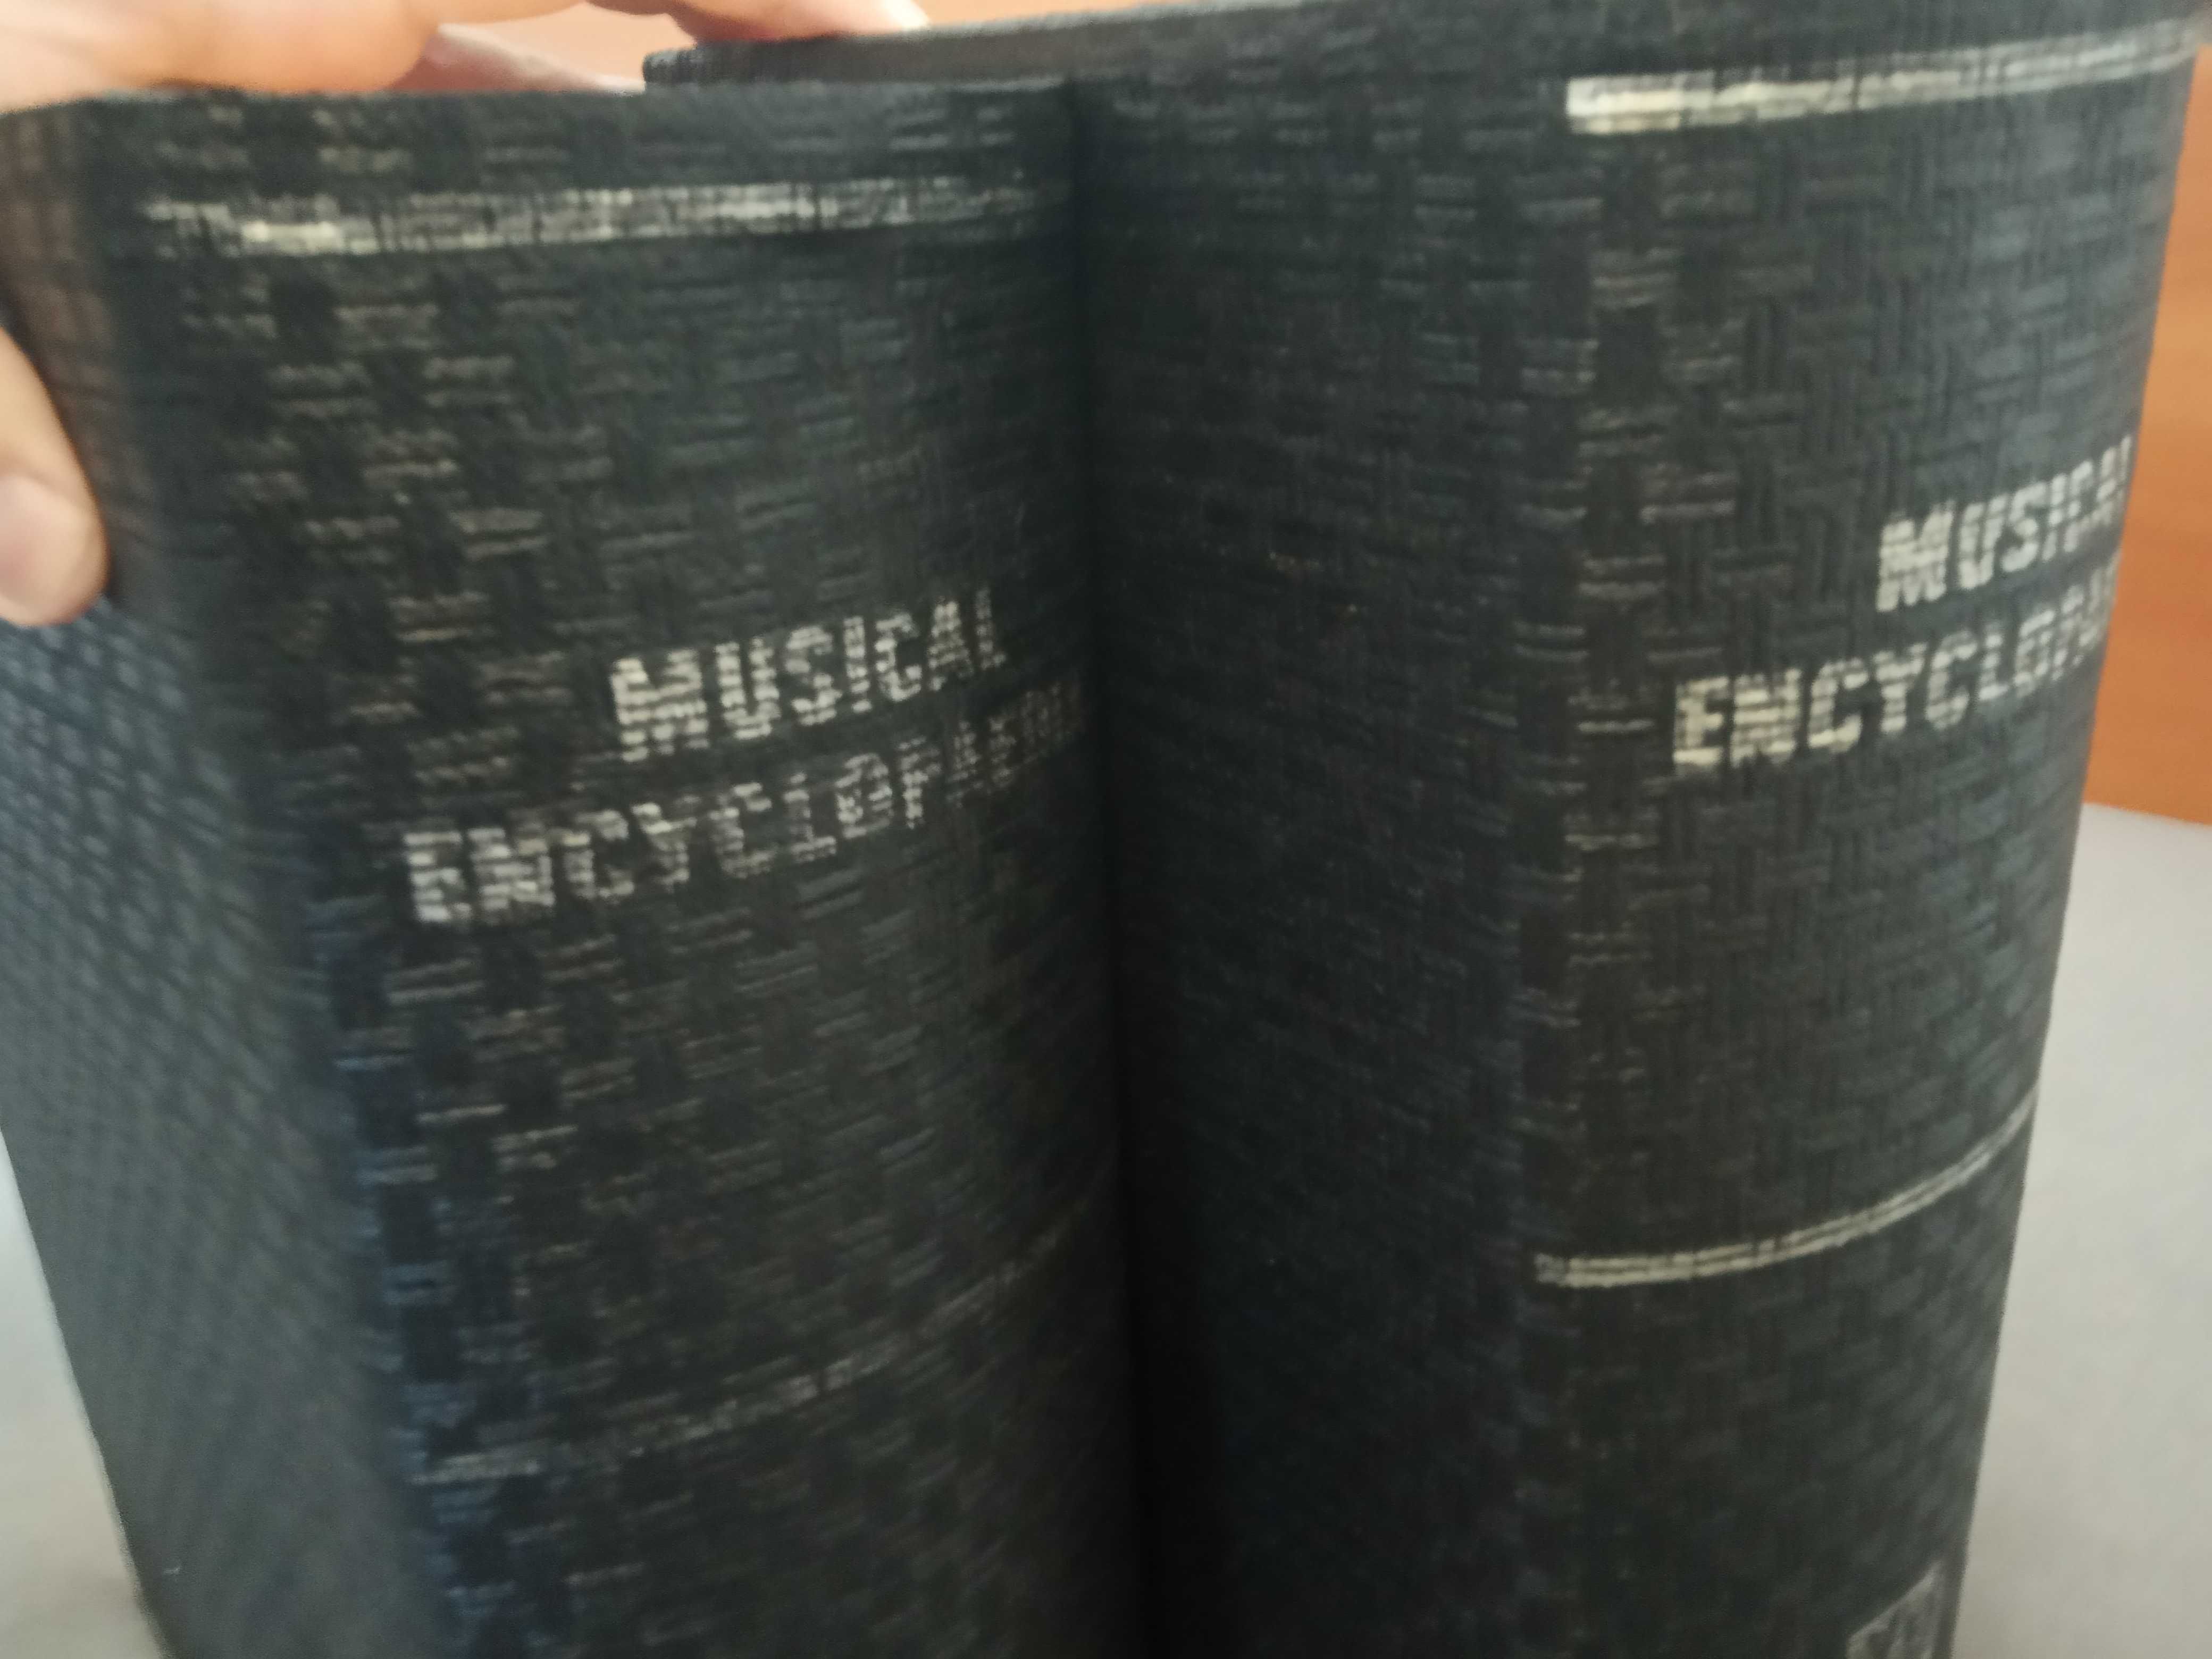 sistem de sunet clasic Musical Encyclopaedia ungaria anii 70 nefolosit